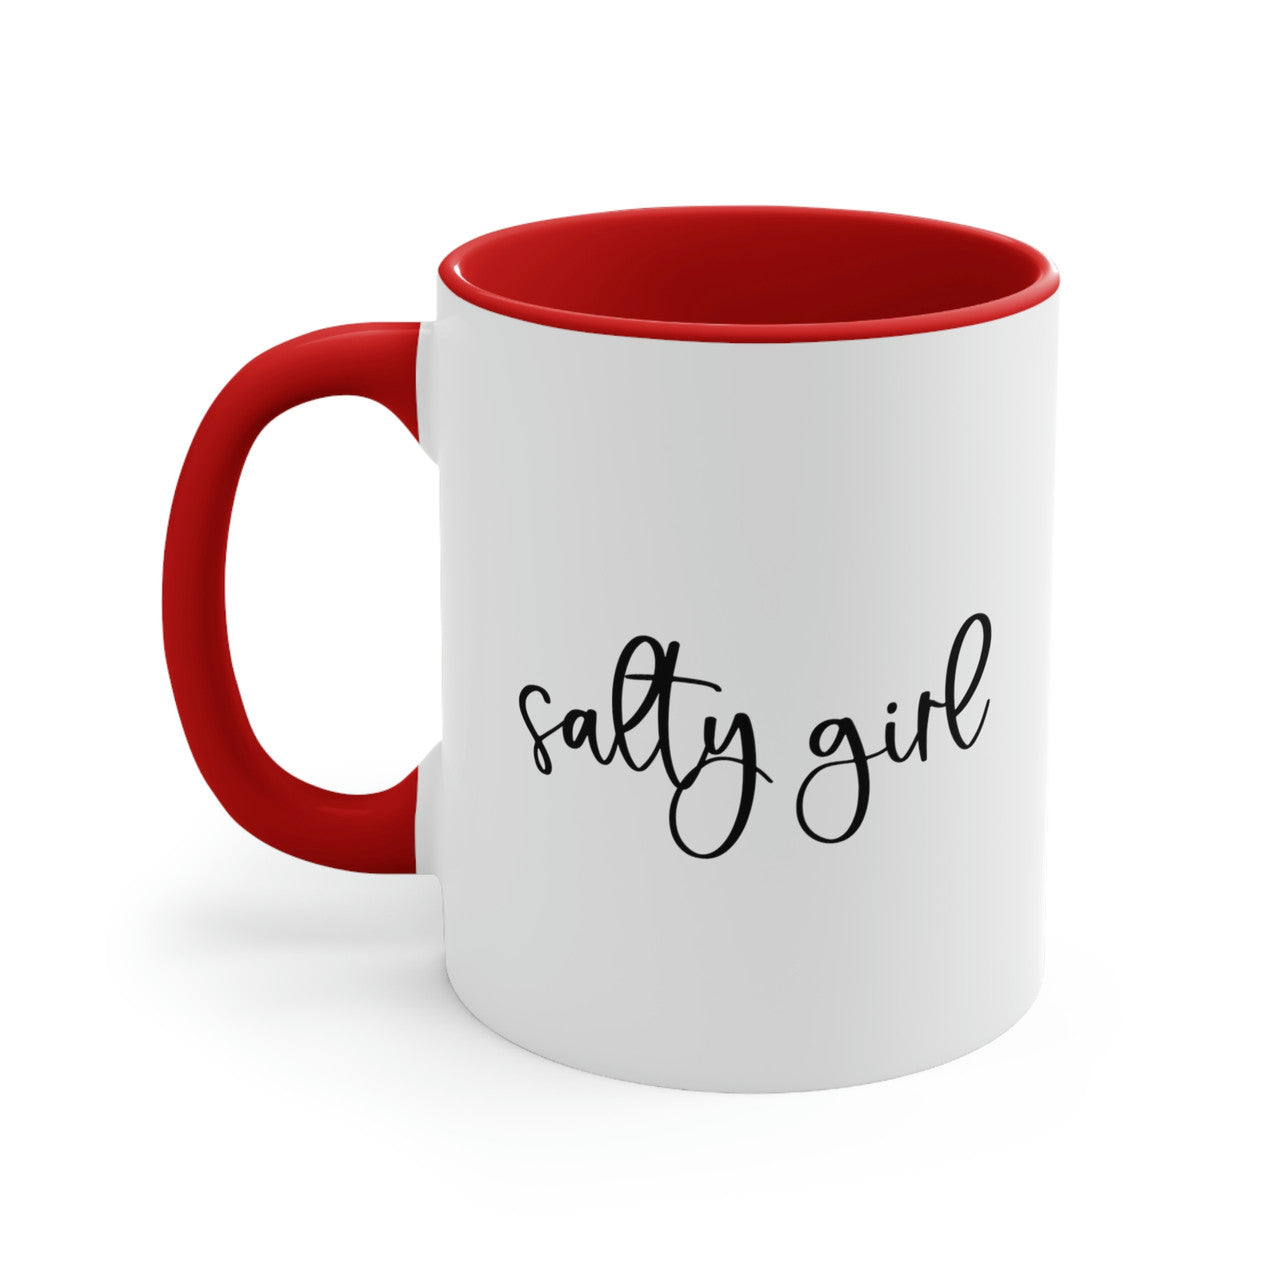 Salty Girl Ceramic Coastal Coffee Mug, 5 Colors Mugs New England Trading Co Red  